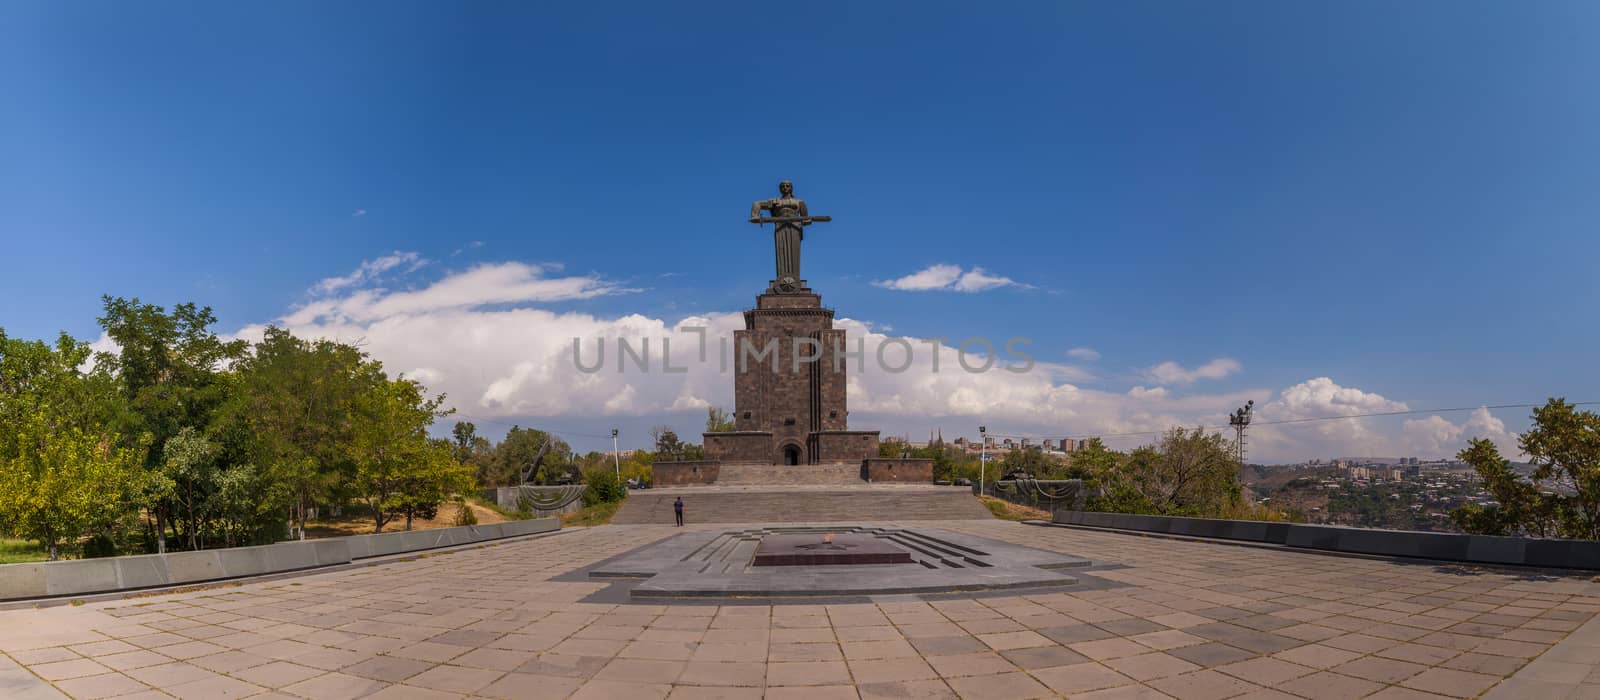 Monument Mother Armenia by sveter